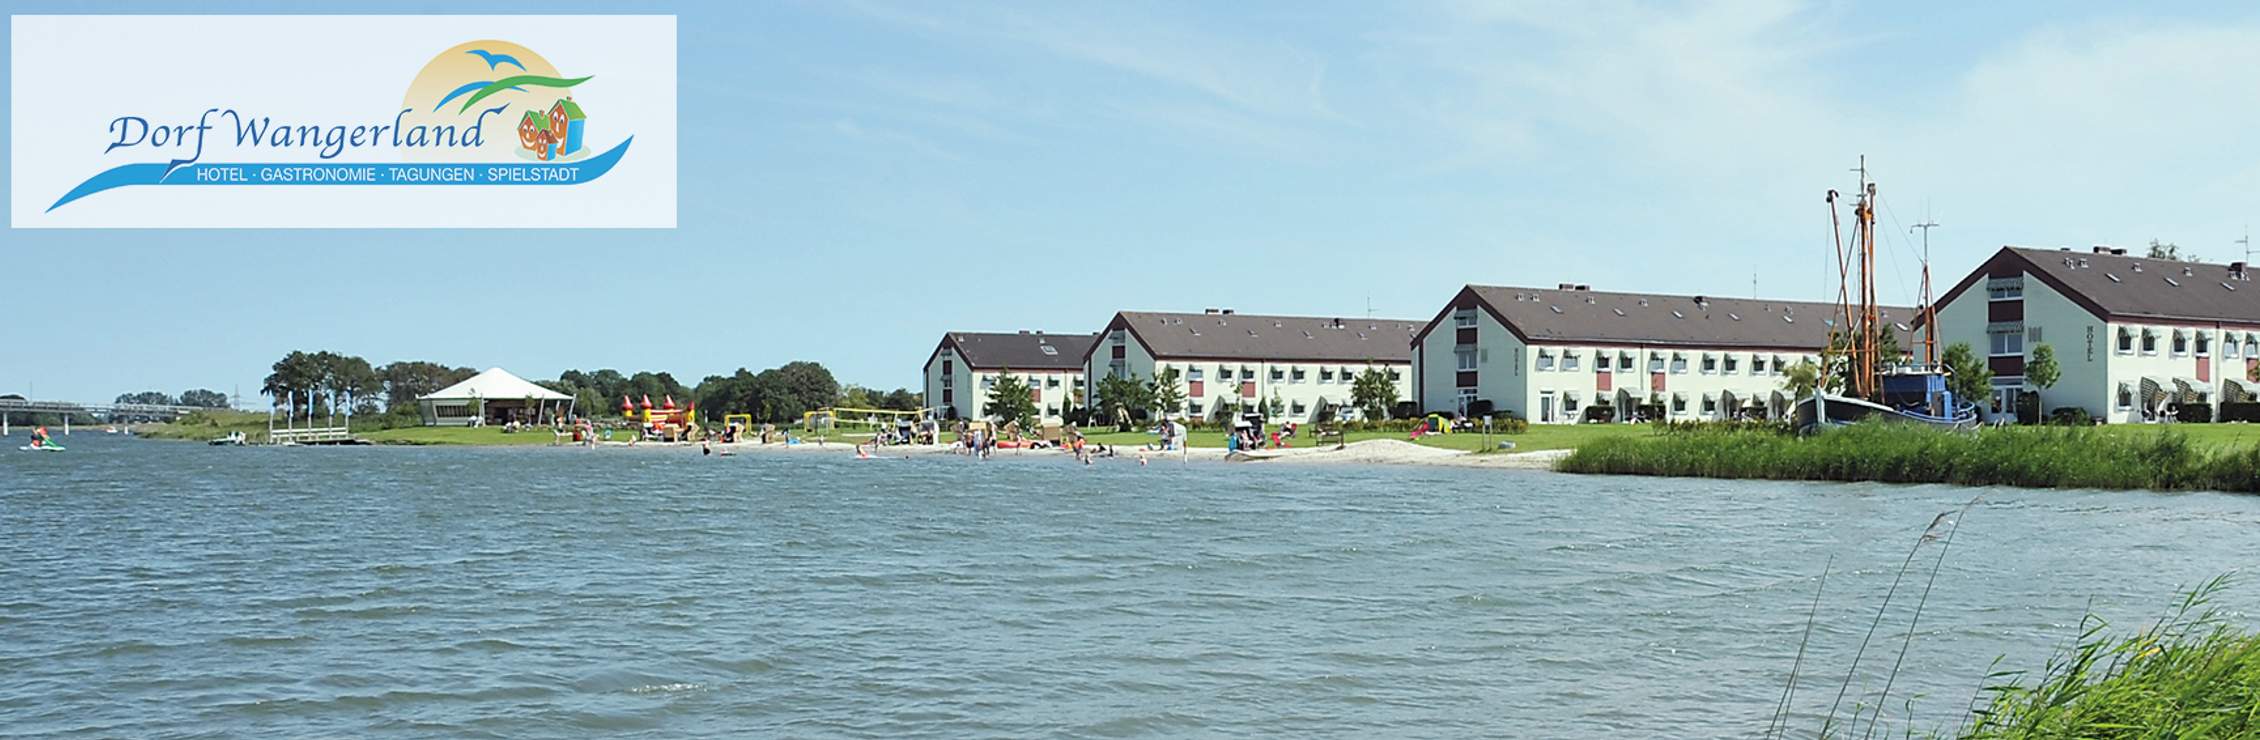 Dorf Wangerland – Strandurlaub im Nordseehotel in Friesland